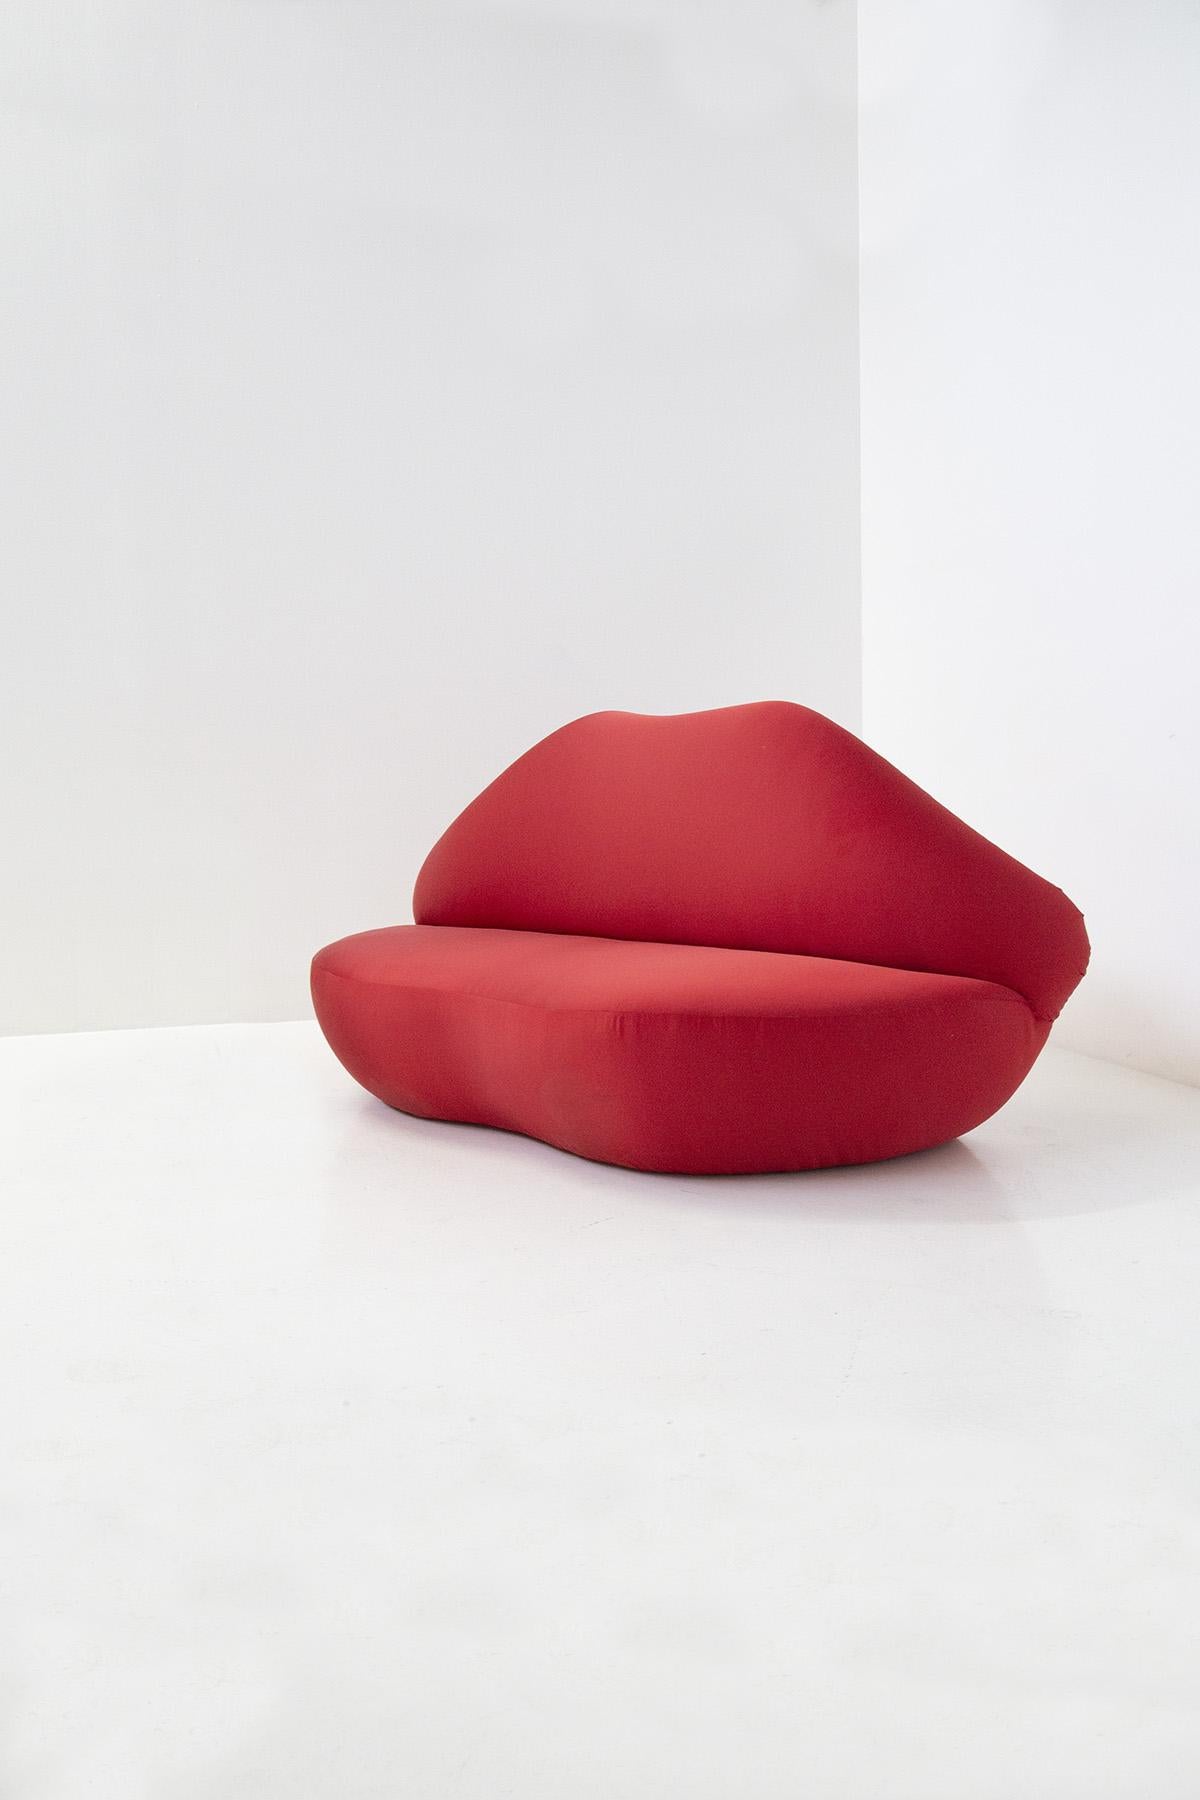 Mid-Century Modern Iconic Italian Red Sofa Mod. Bocca Attributed. to Edra Studio 65